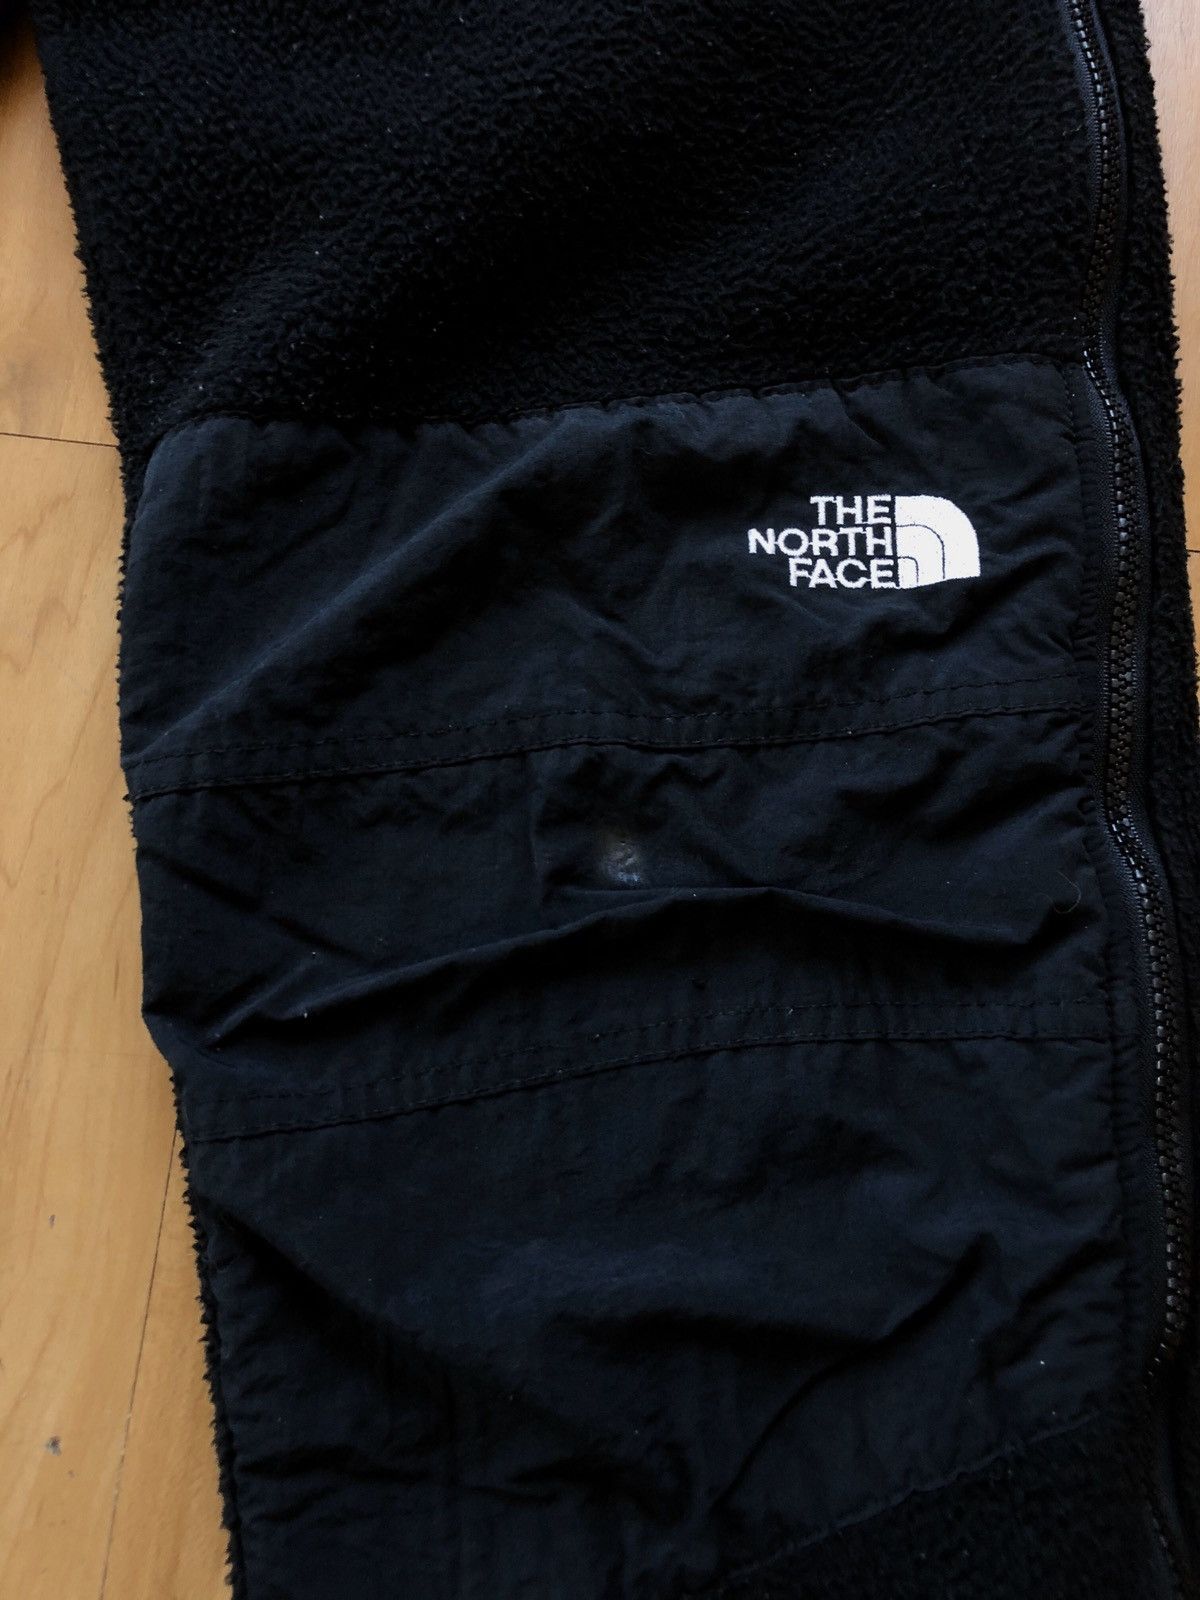 The North Face The North Face Vintage Denali Fleece Pants Black Medium 90’s Size US 30 / EU 46 - 3 Thumbnail